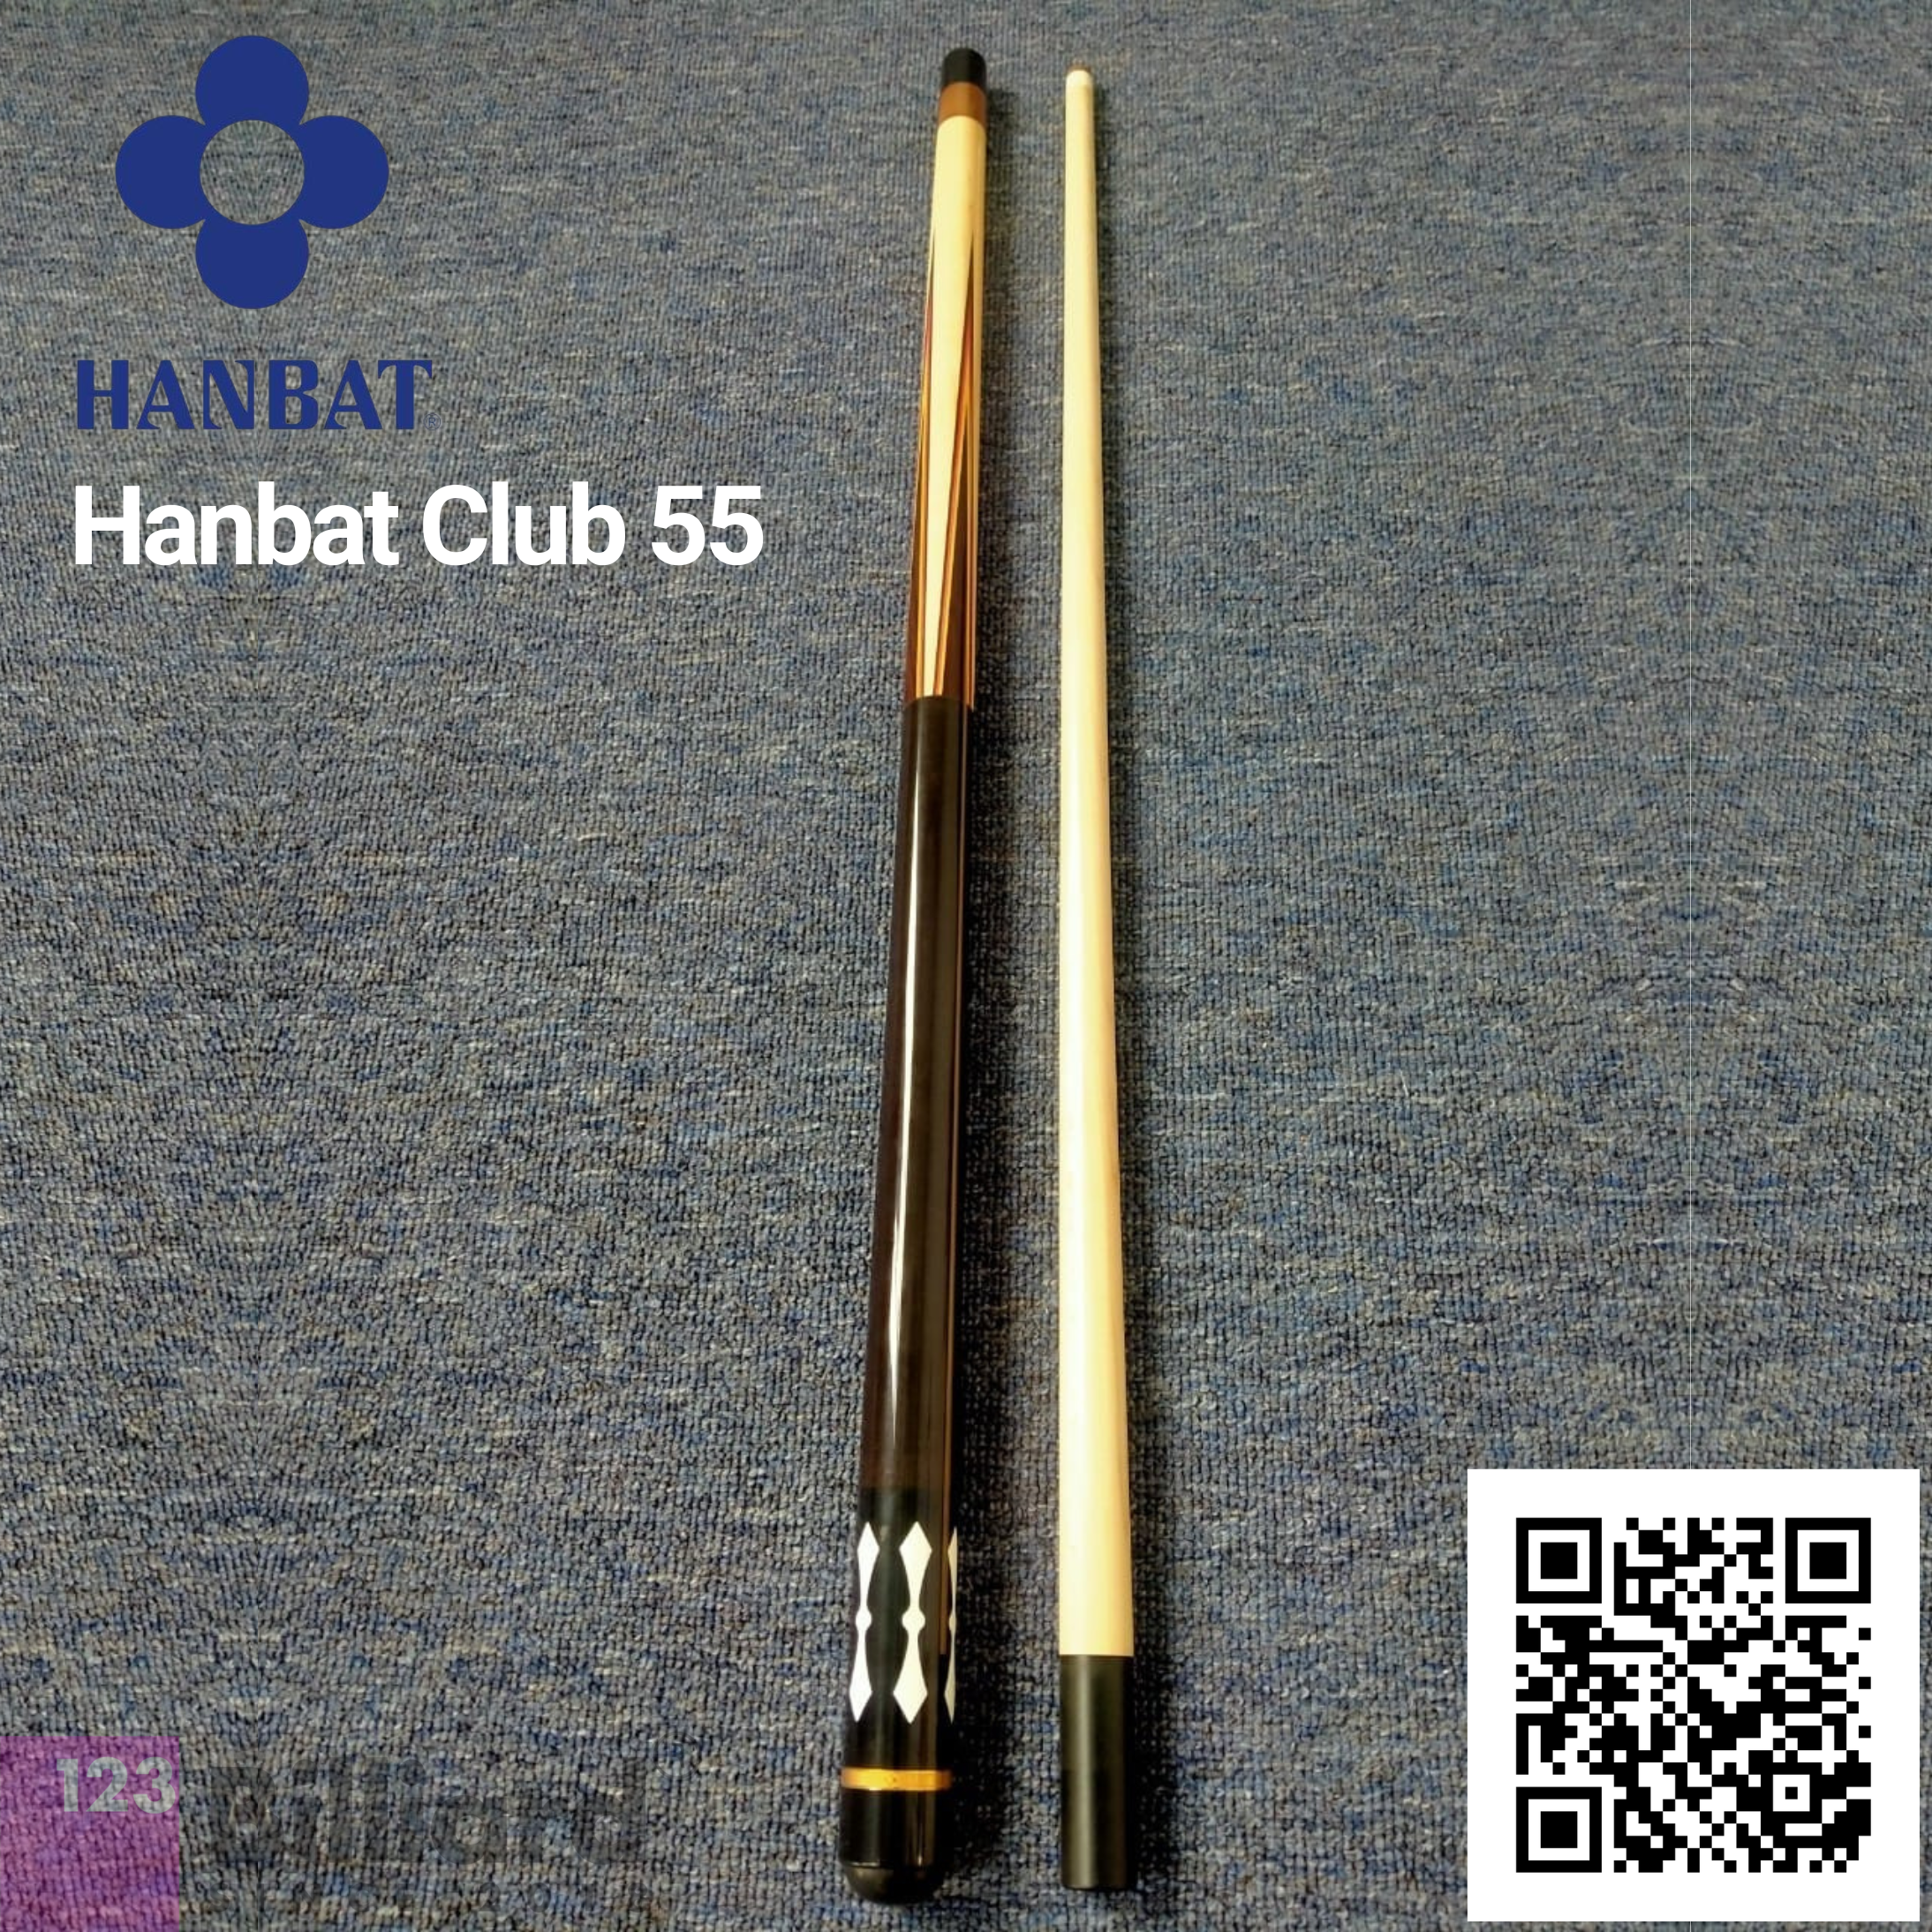 Hanbat Club 55